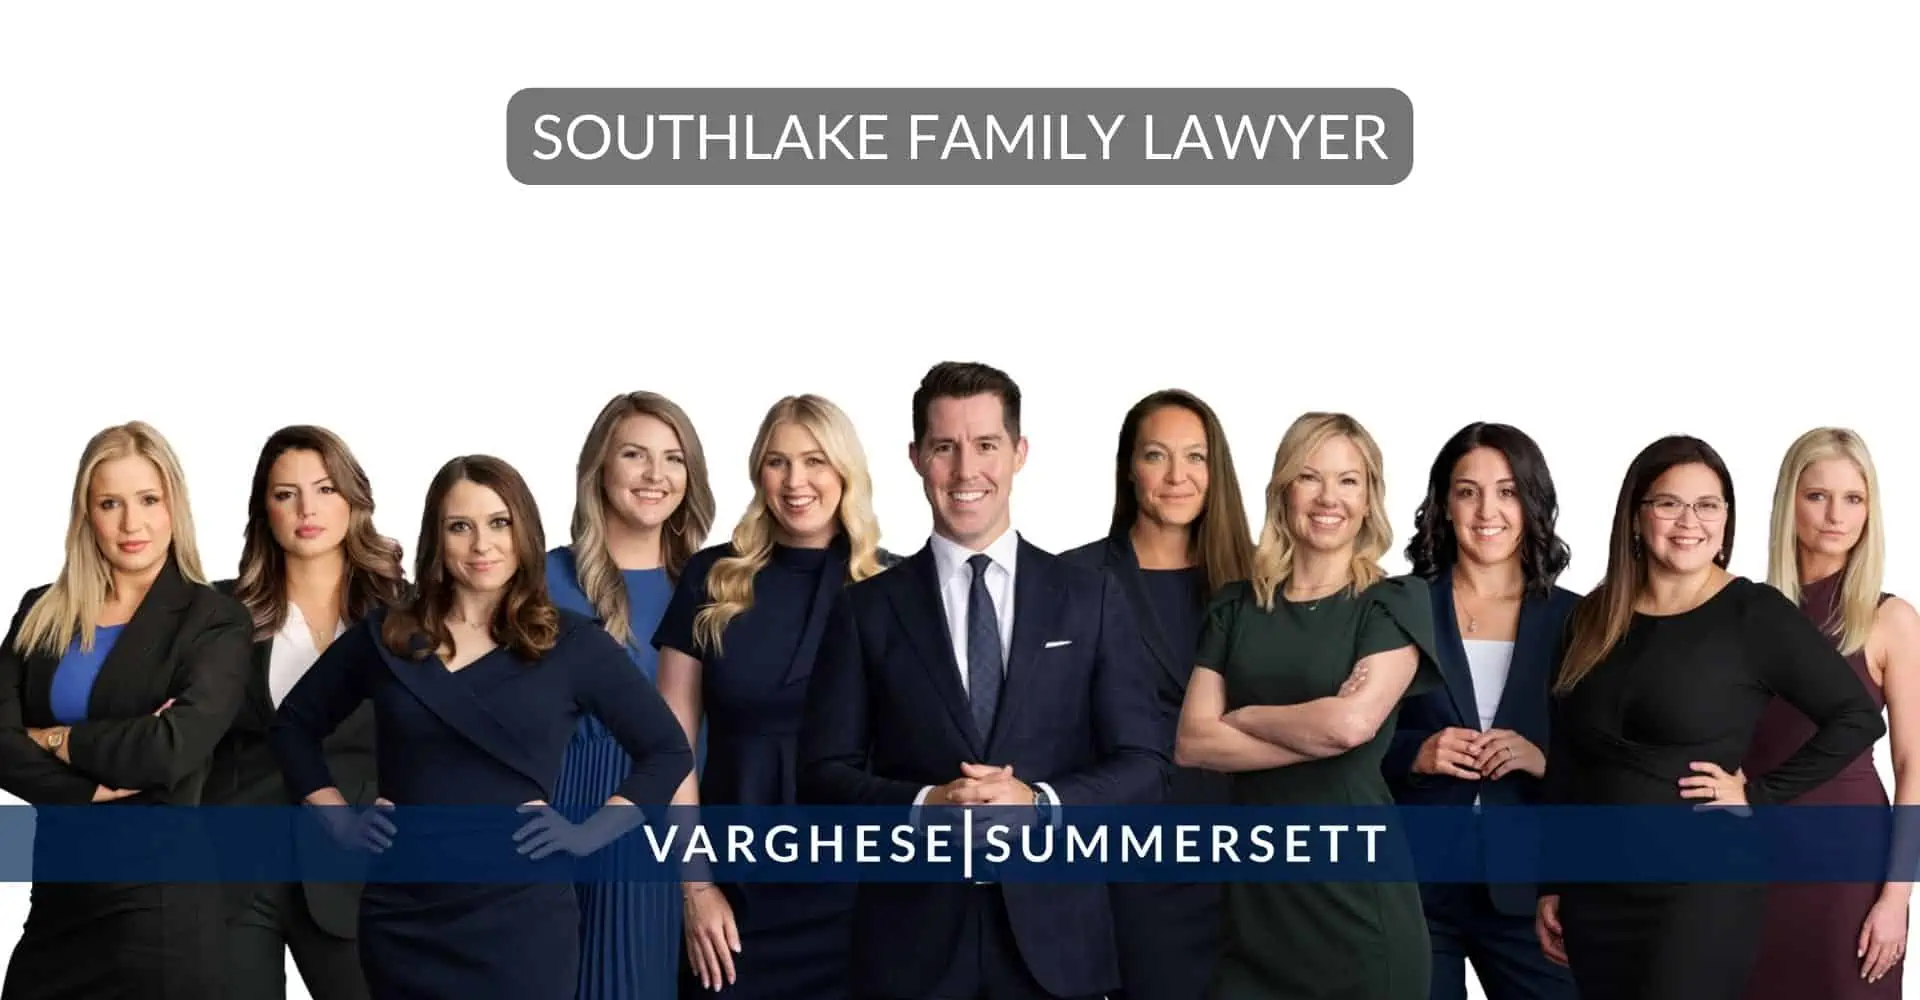 southlake family law team